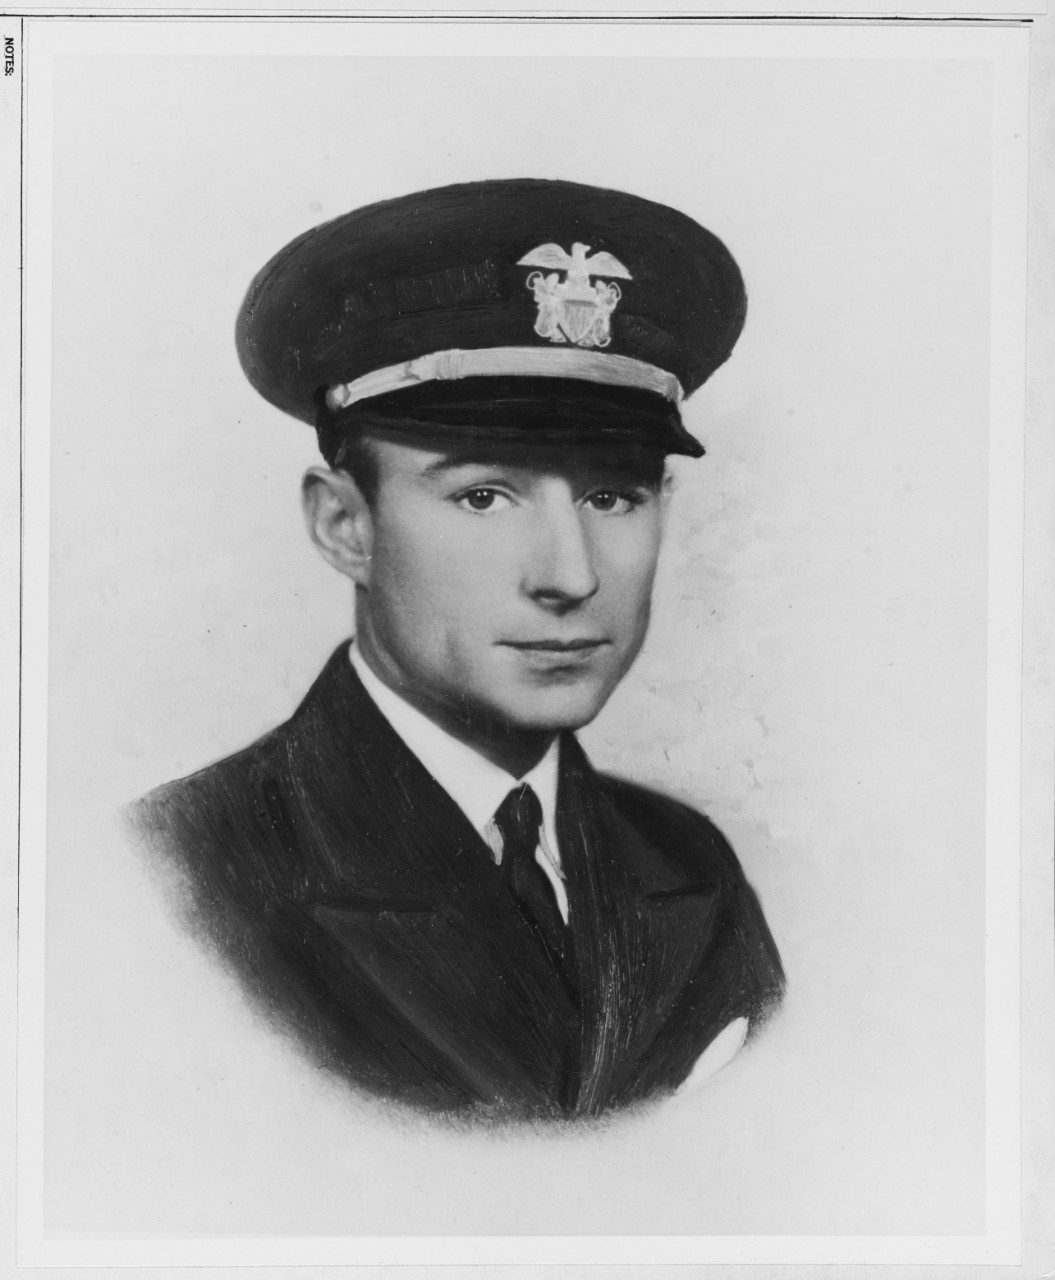 Lieutenant Bernard Lige Austin, USN